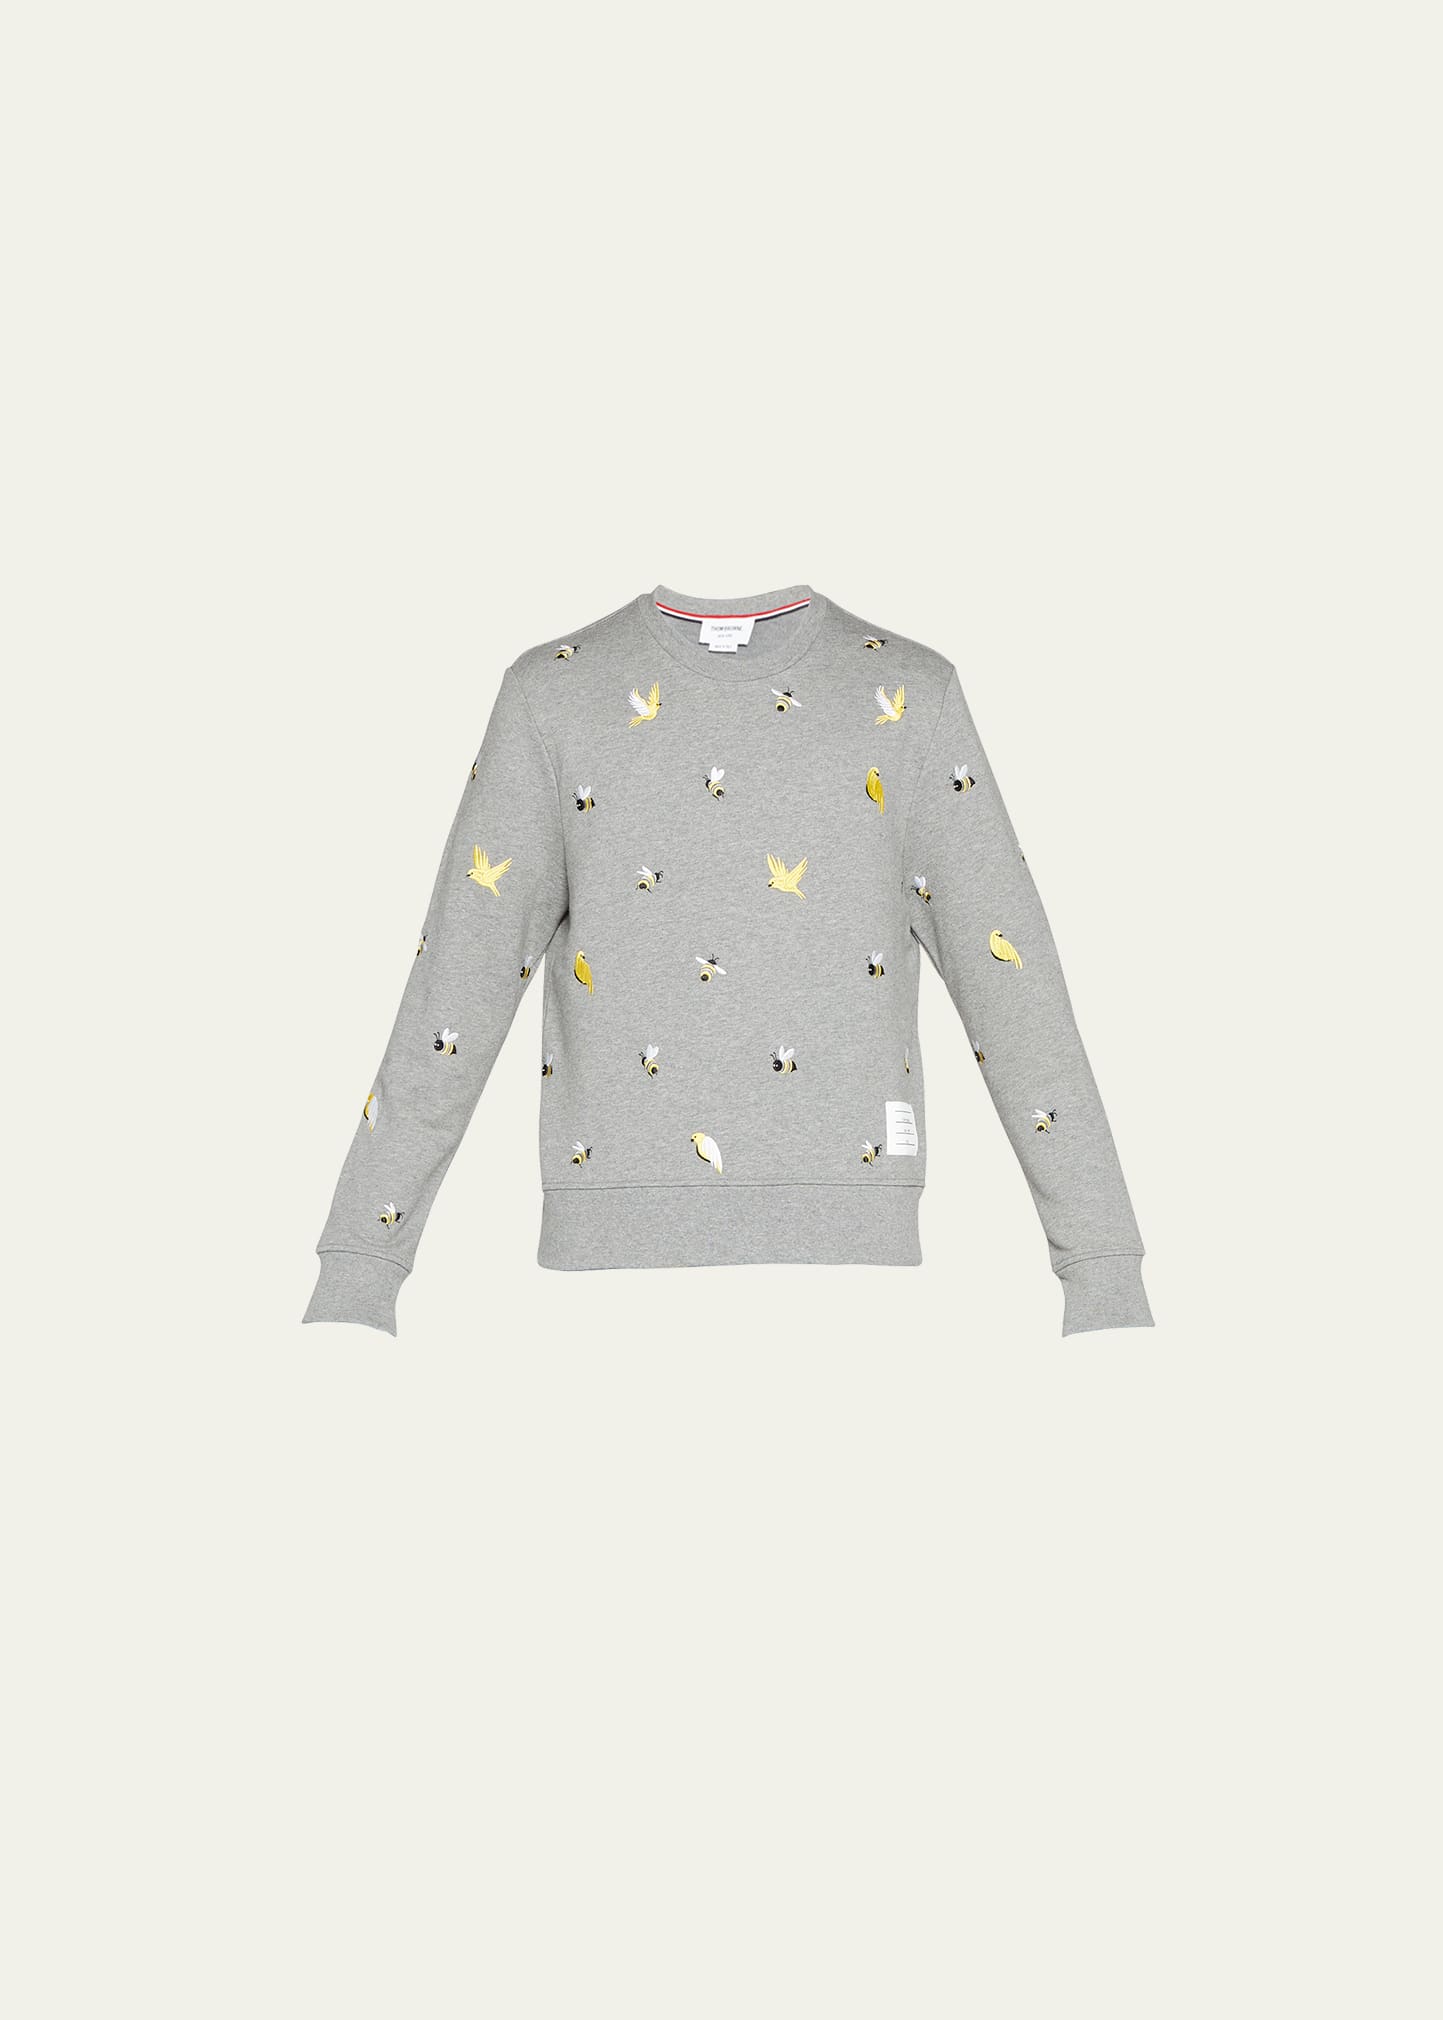 Men's Birds and Bees Embroidered Sweatshirt